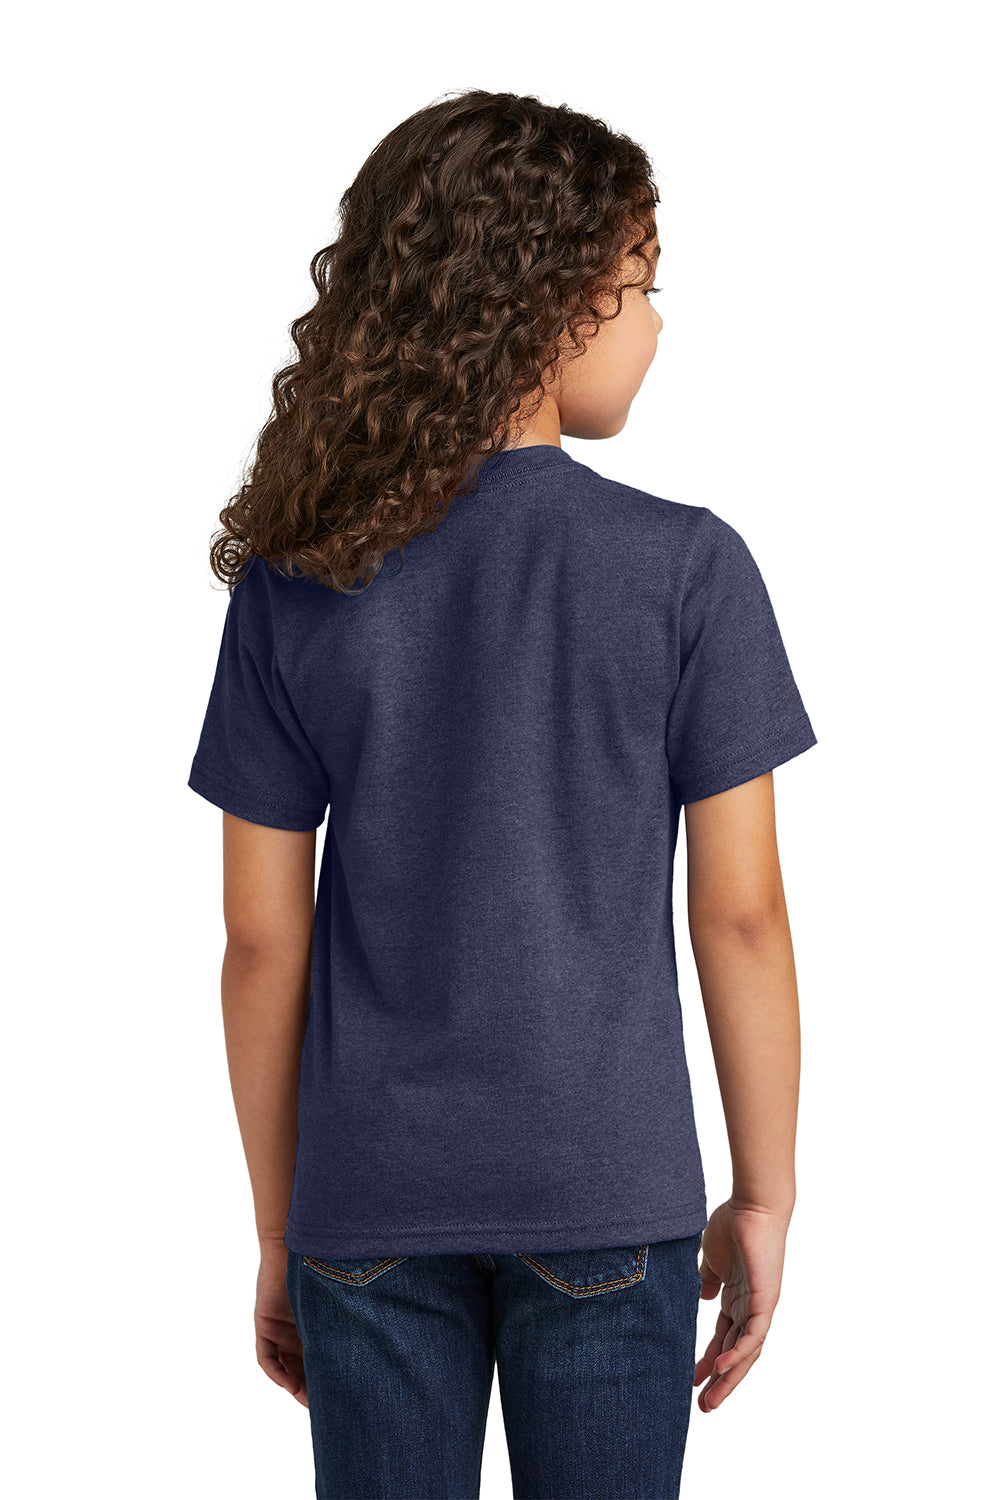 Port & Company PC330Y Youth Short Sleeve Crewneck T-Shirt Heather Team Navy Blue Back